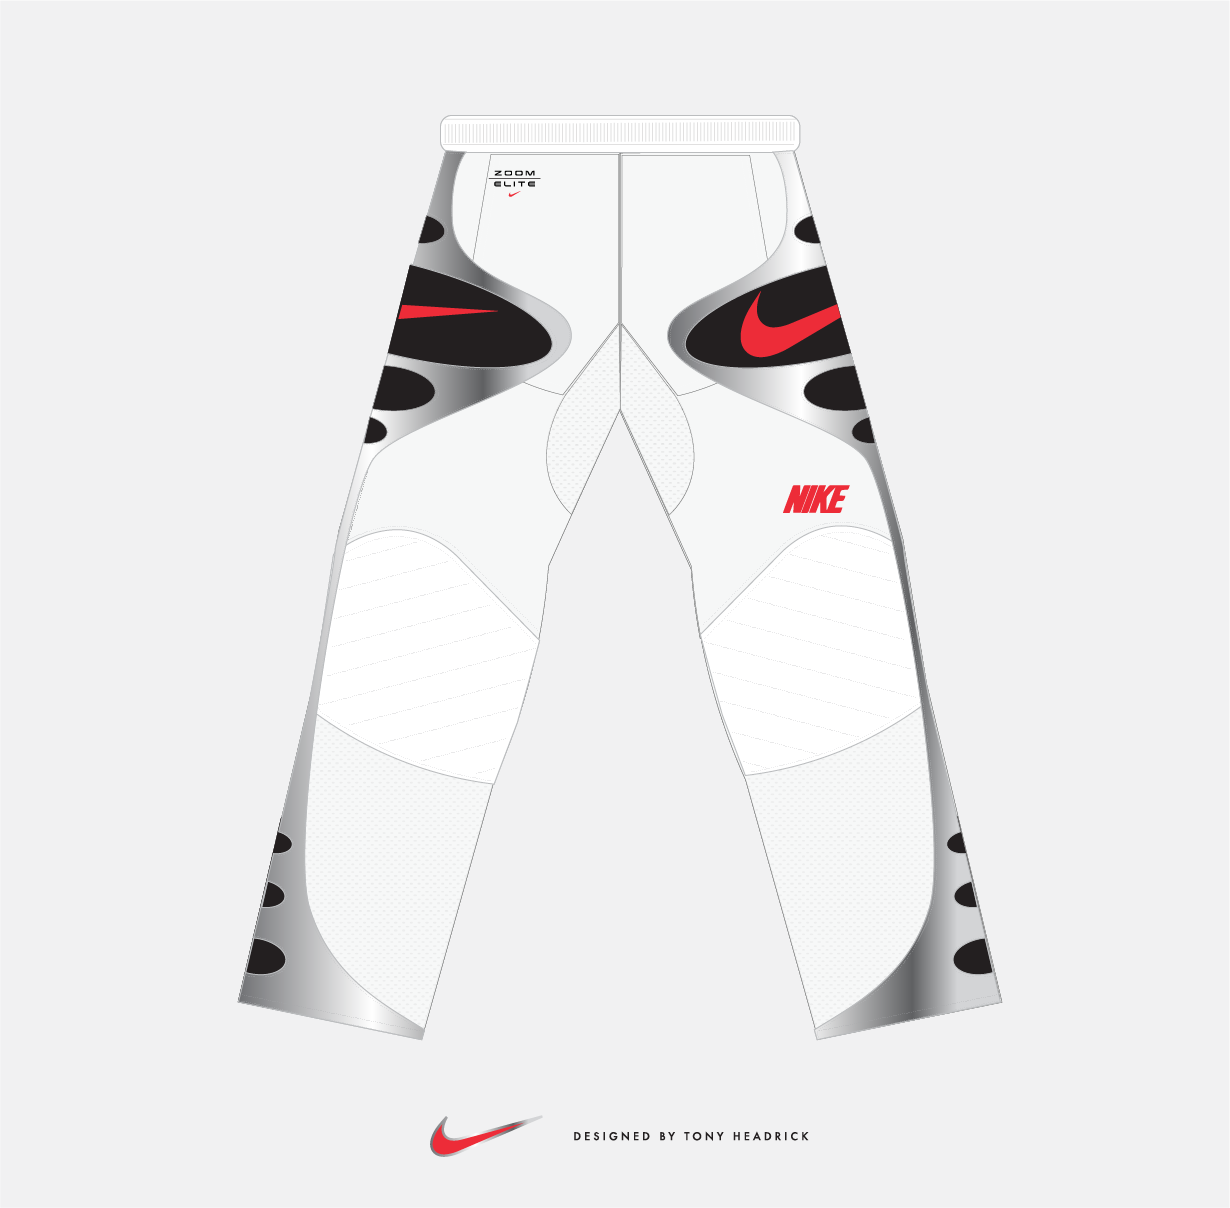 Just Do Hockey - Nike Pro Roller Hockey Pants Concept